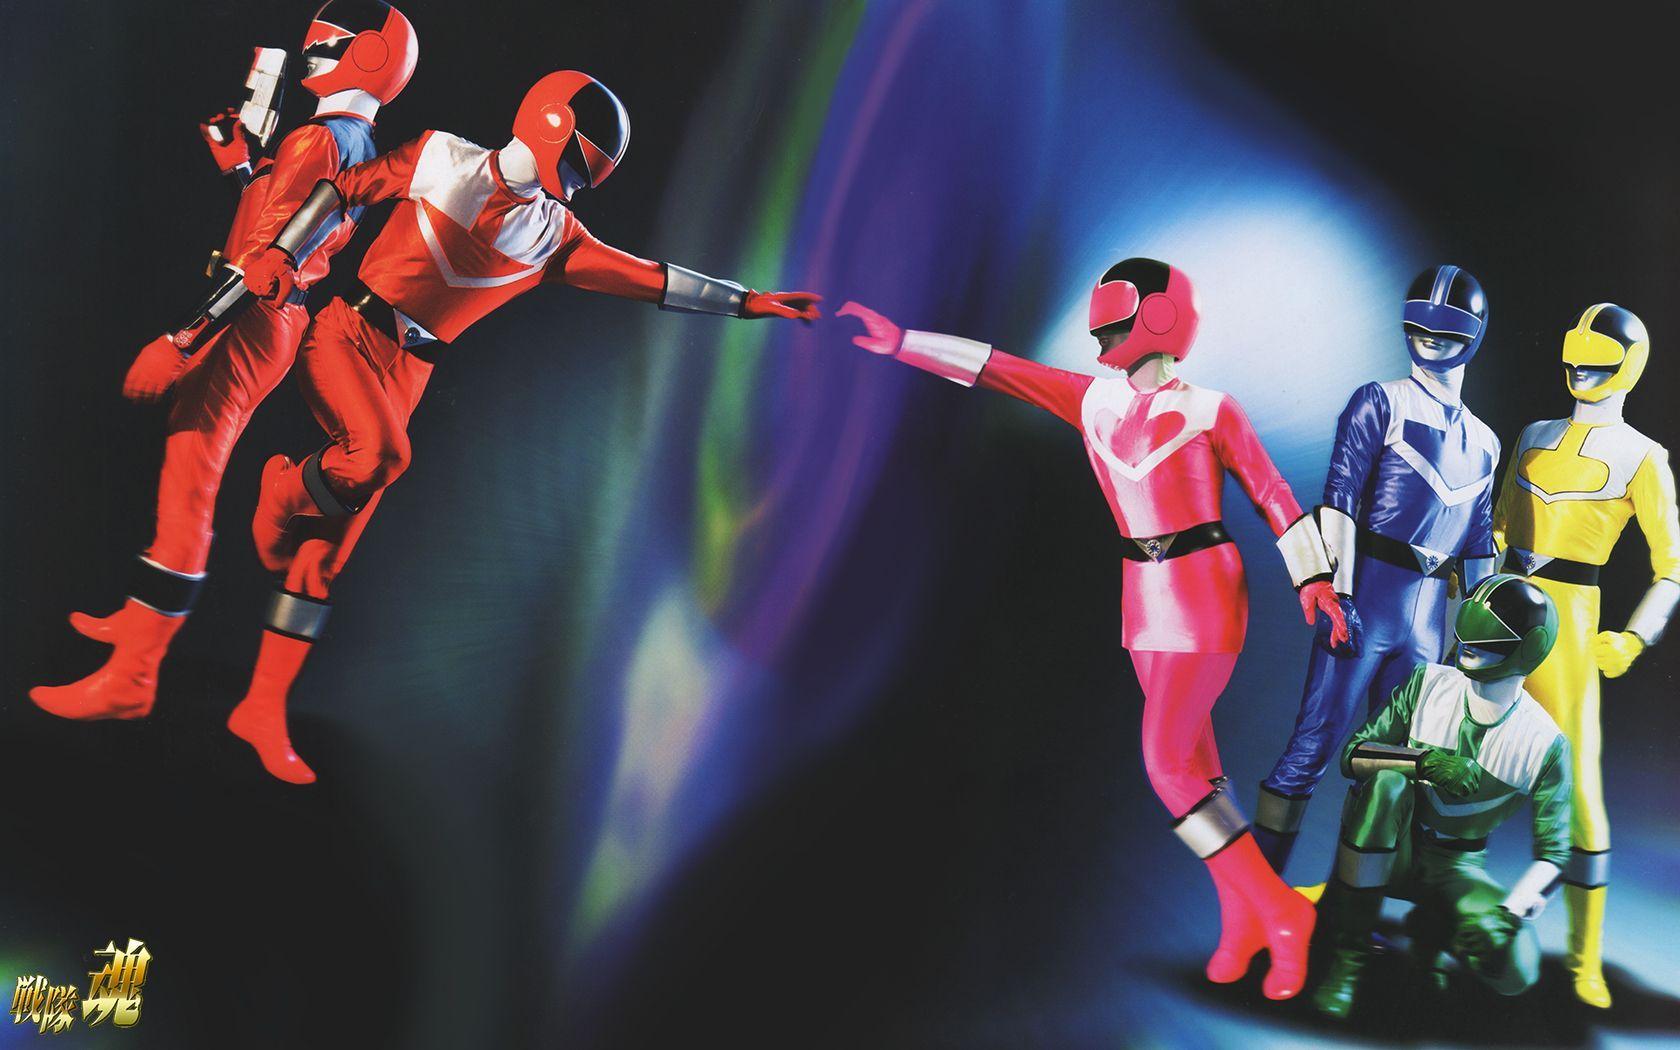 Timeranger / Power Rangers Time Force. Super Sentai / Power Rangers